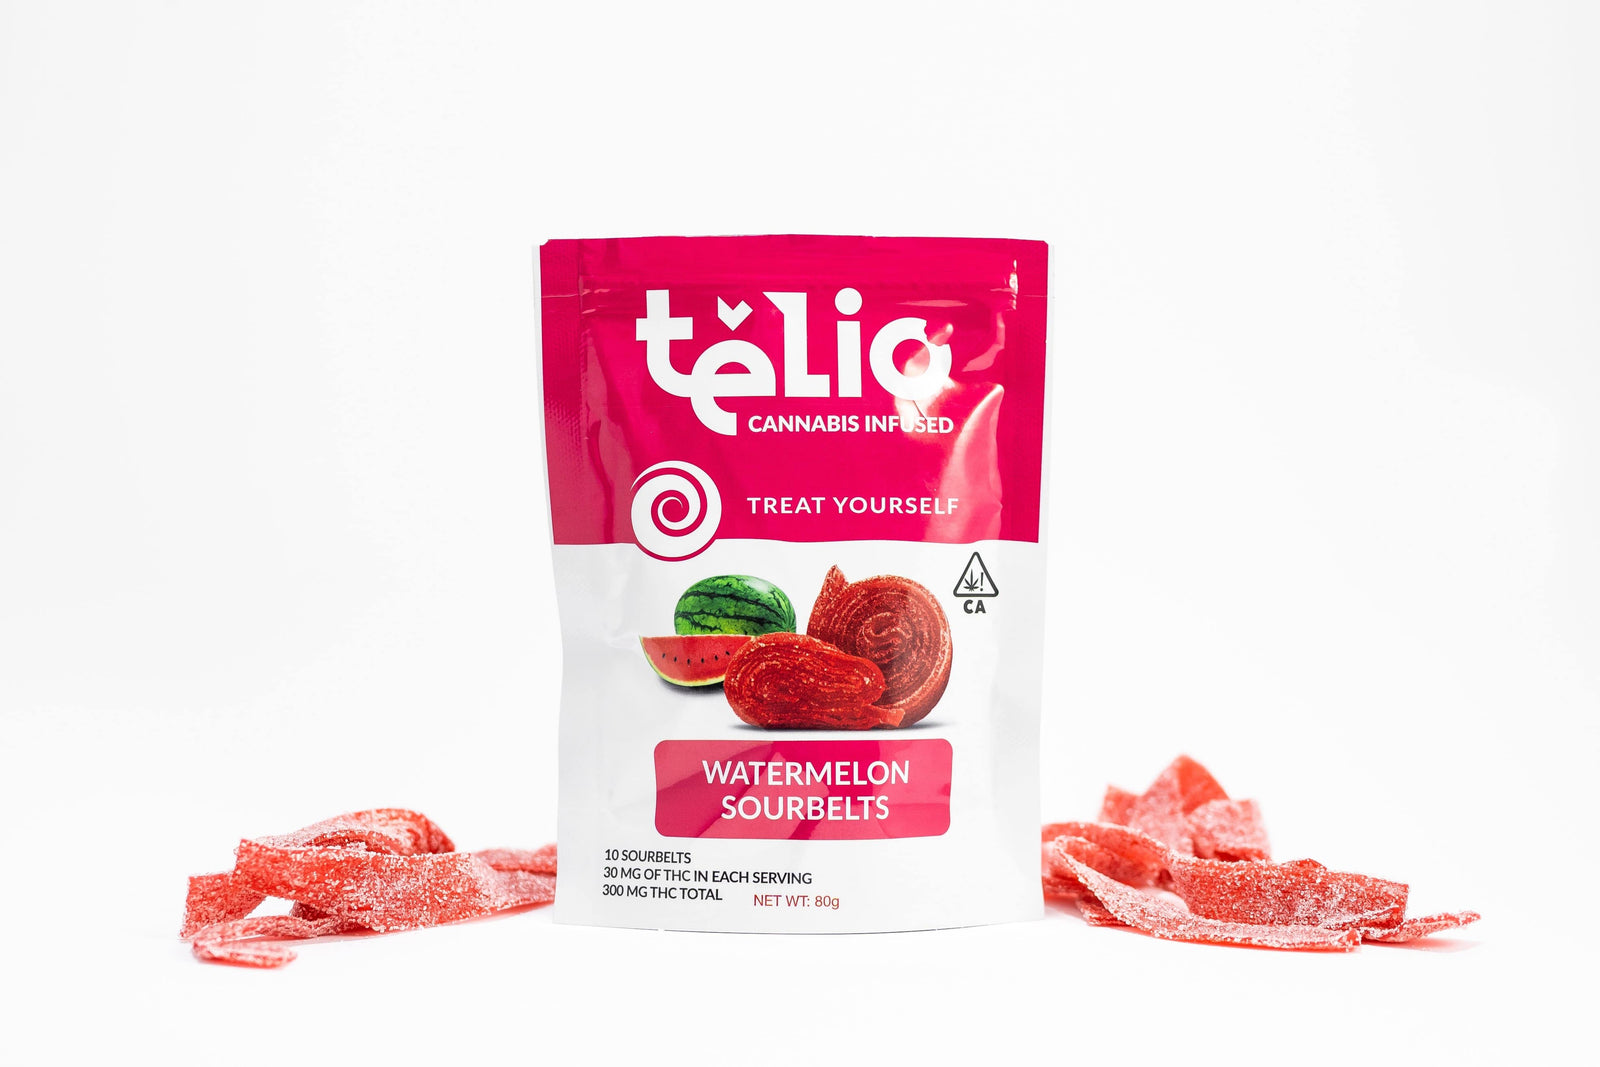 Telio Watermelon Sour Belts Gummy Edible - The Balloon Room